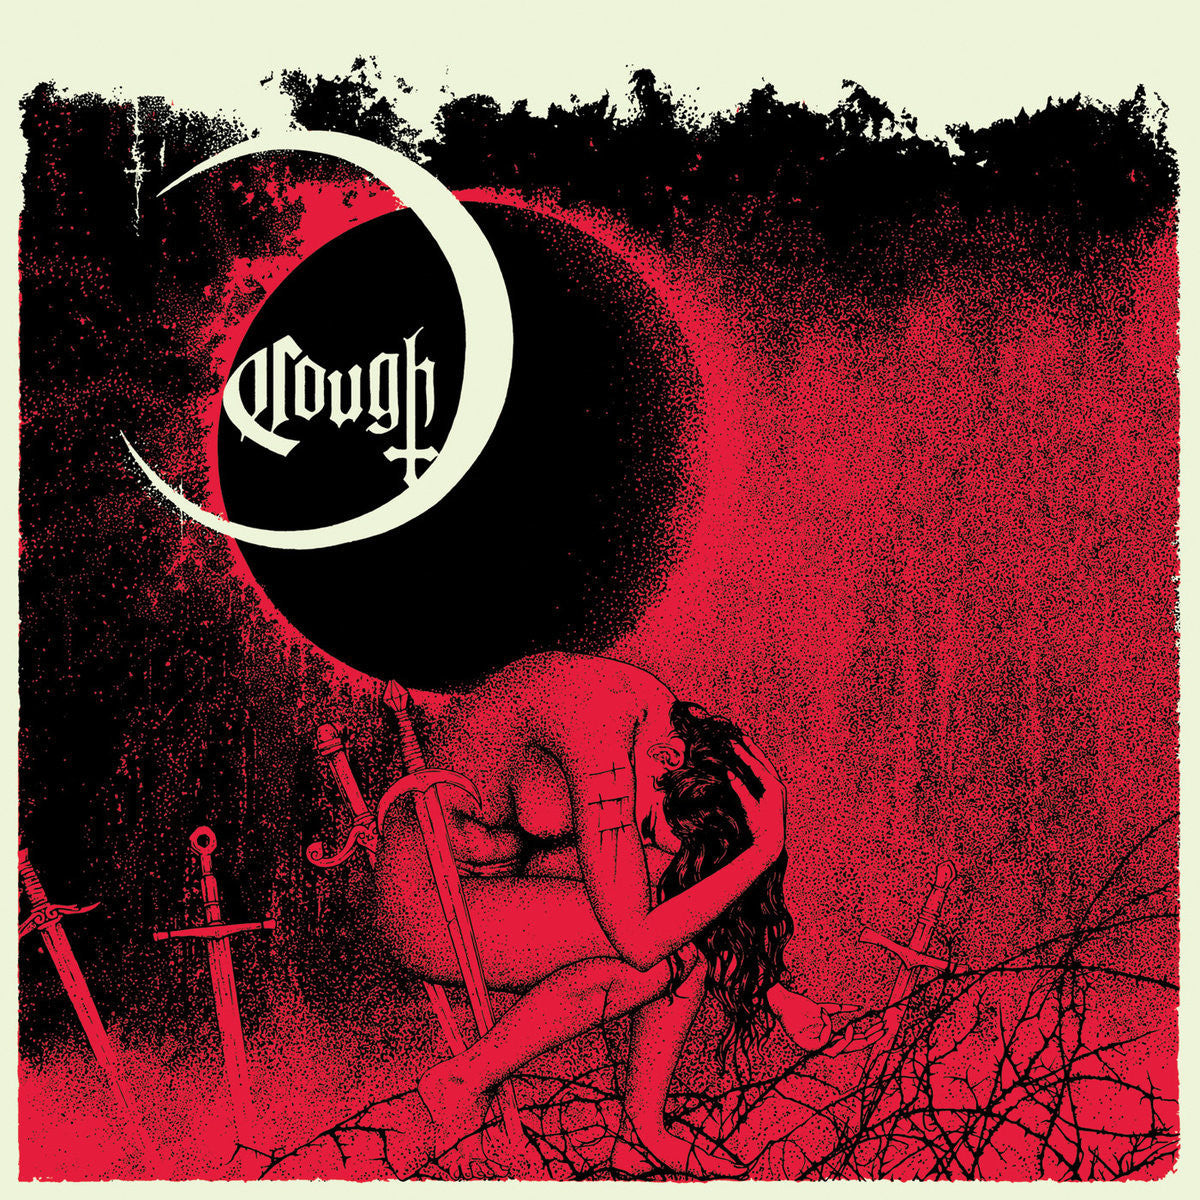 Cough - Ritual Abuse - New Vinyl Record 2010 Relapse Records Gatefold 2-LP Reissue (700 on black) - Richmond, VA Doom / Sludge